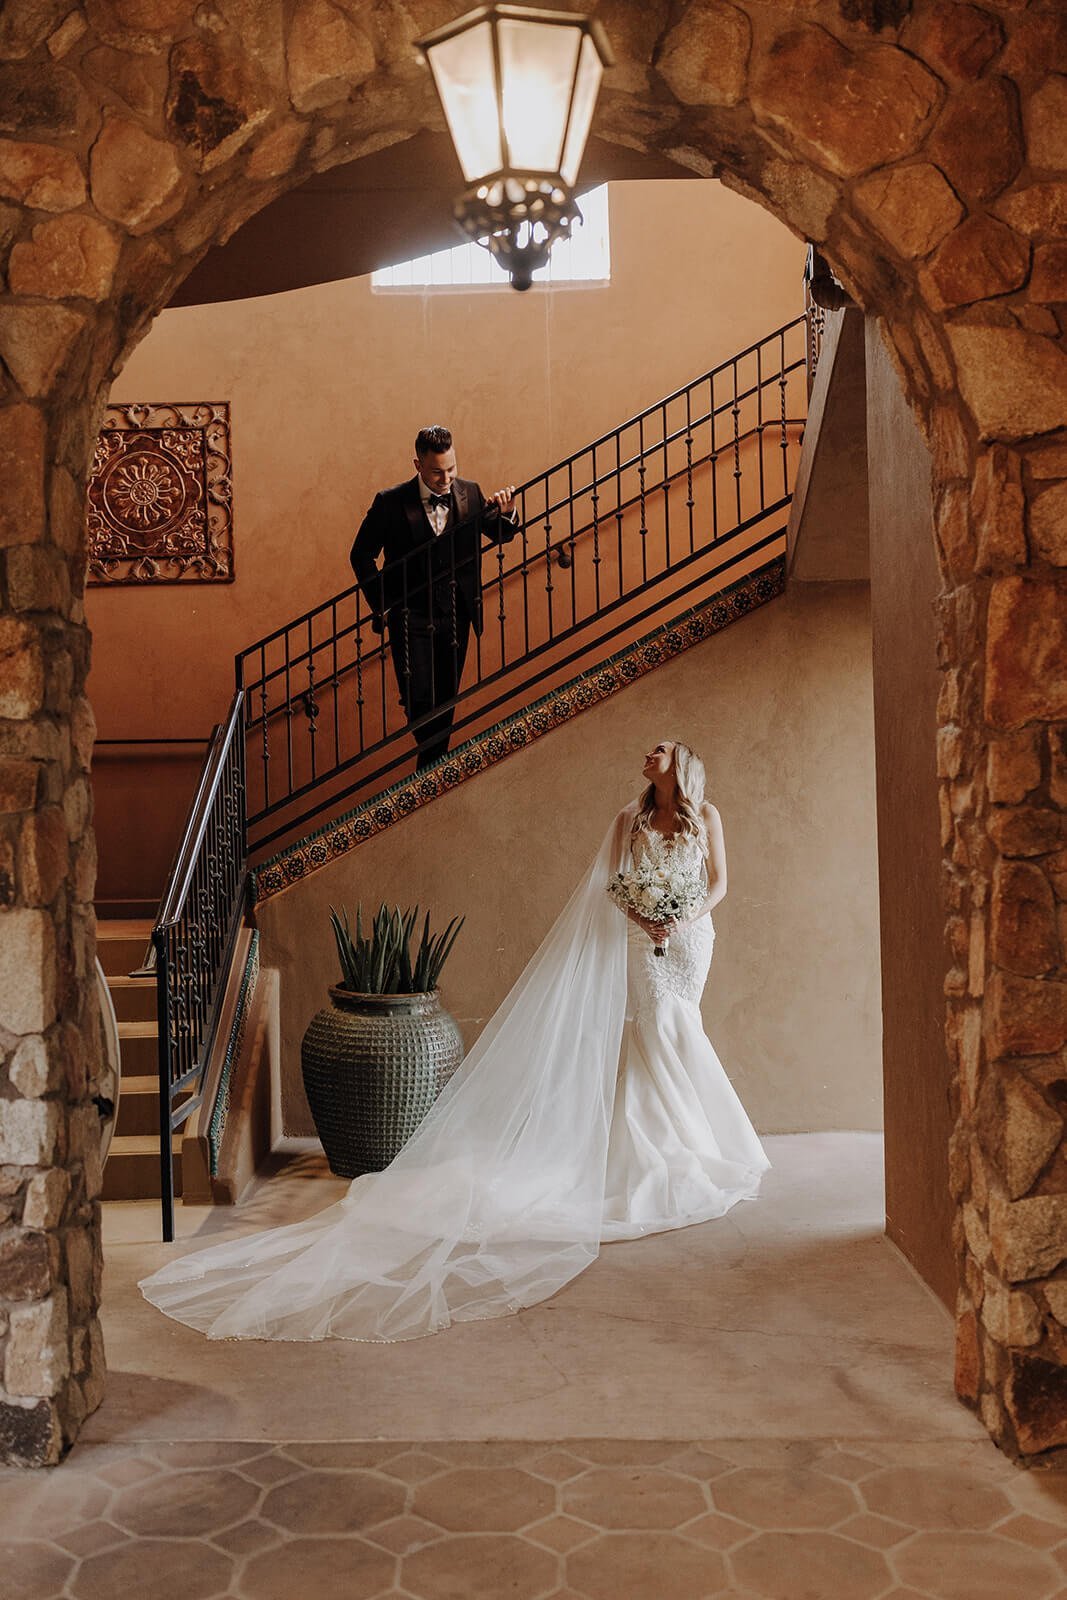 Groom standing on staircase, bride standing below in beautiful stone entryway at Blackstone Country Club in Arizona.